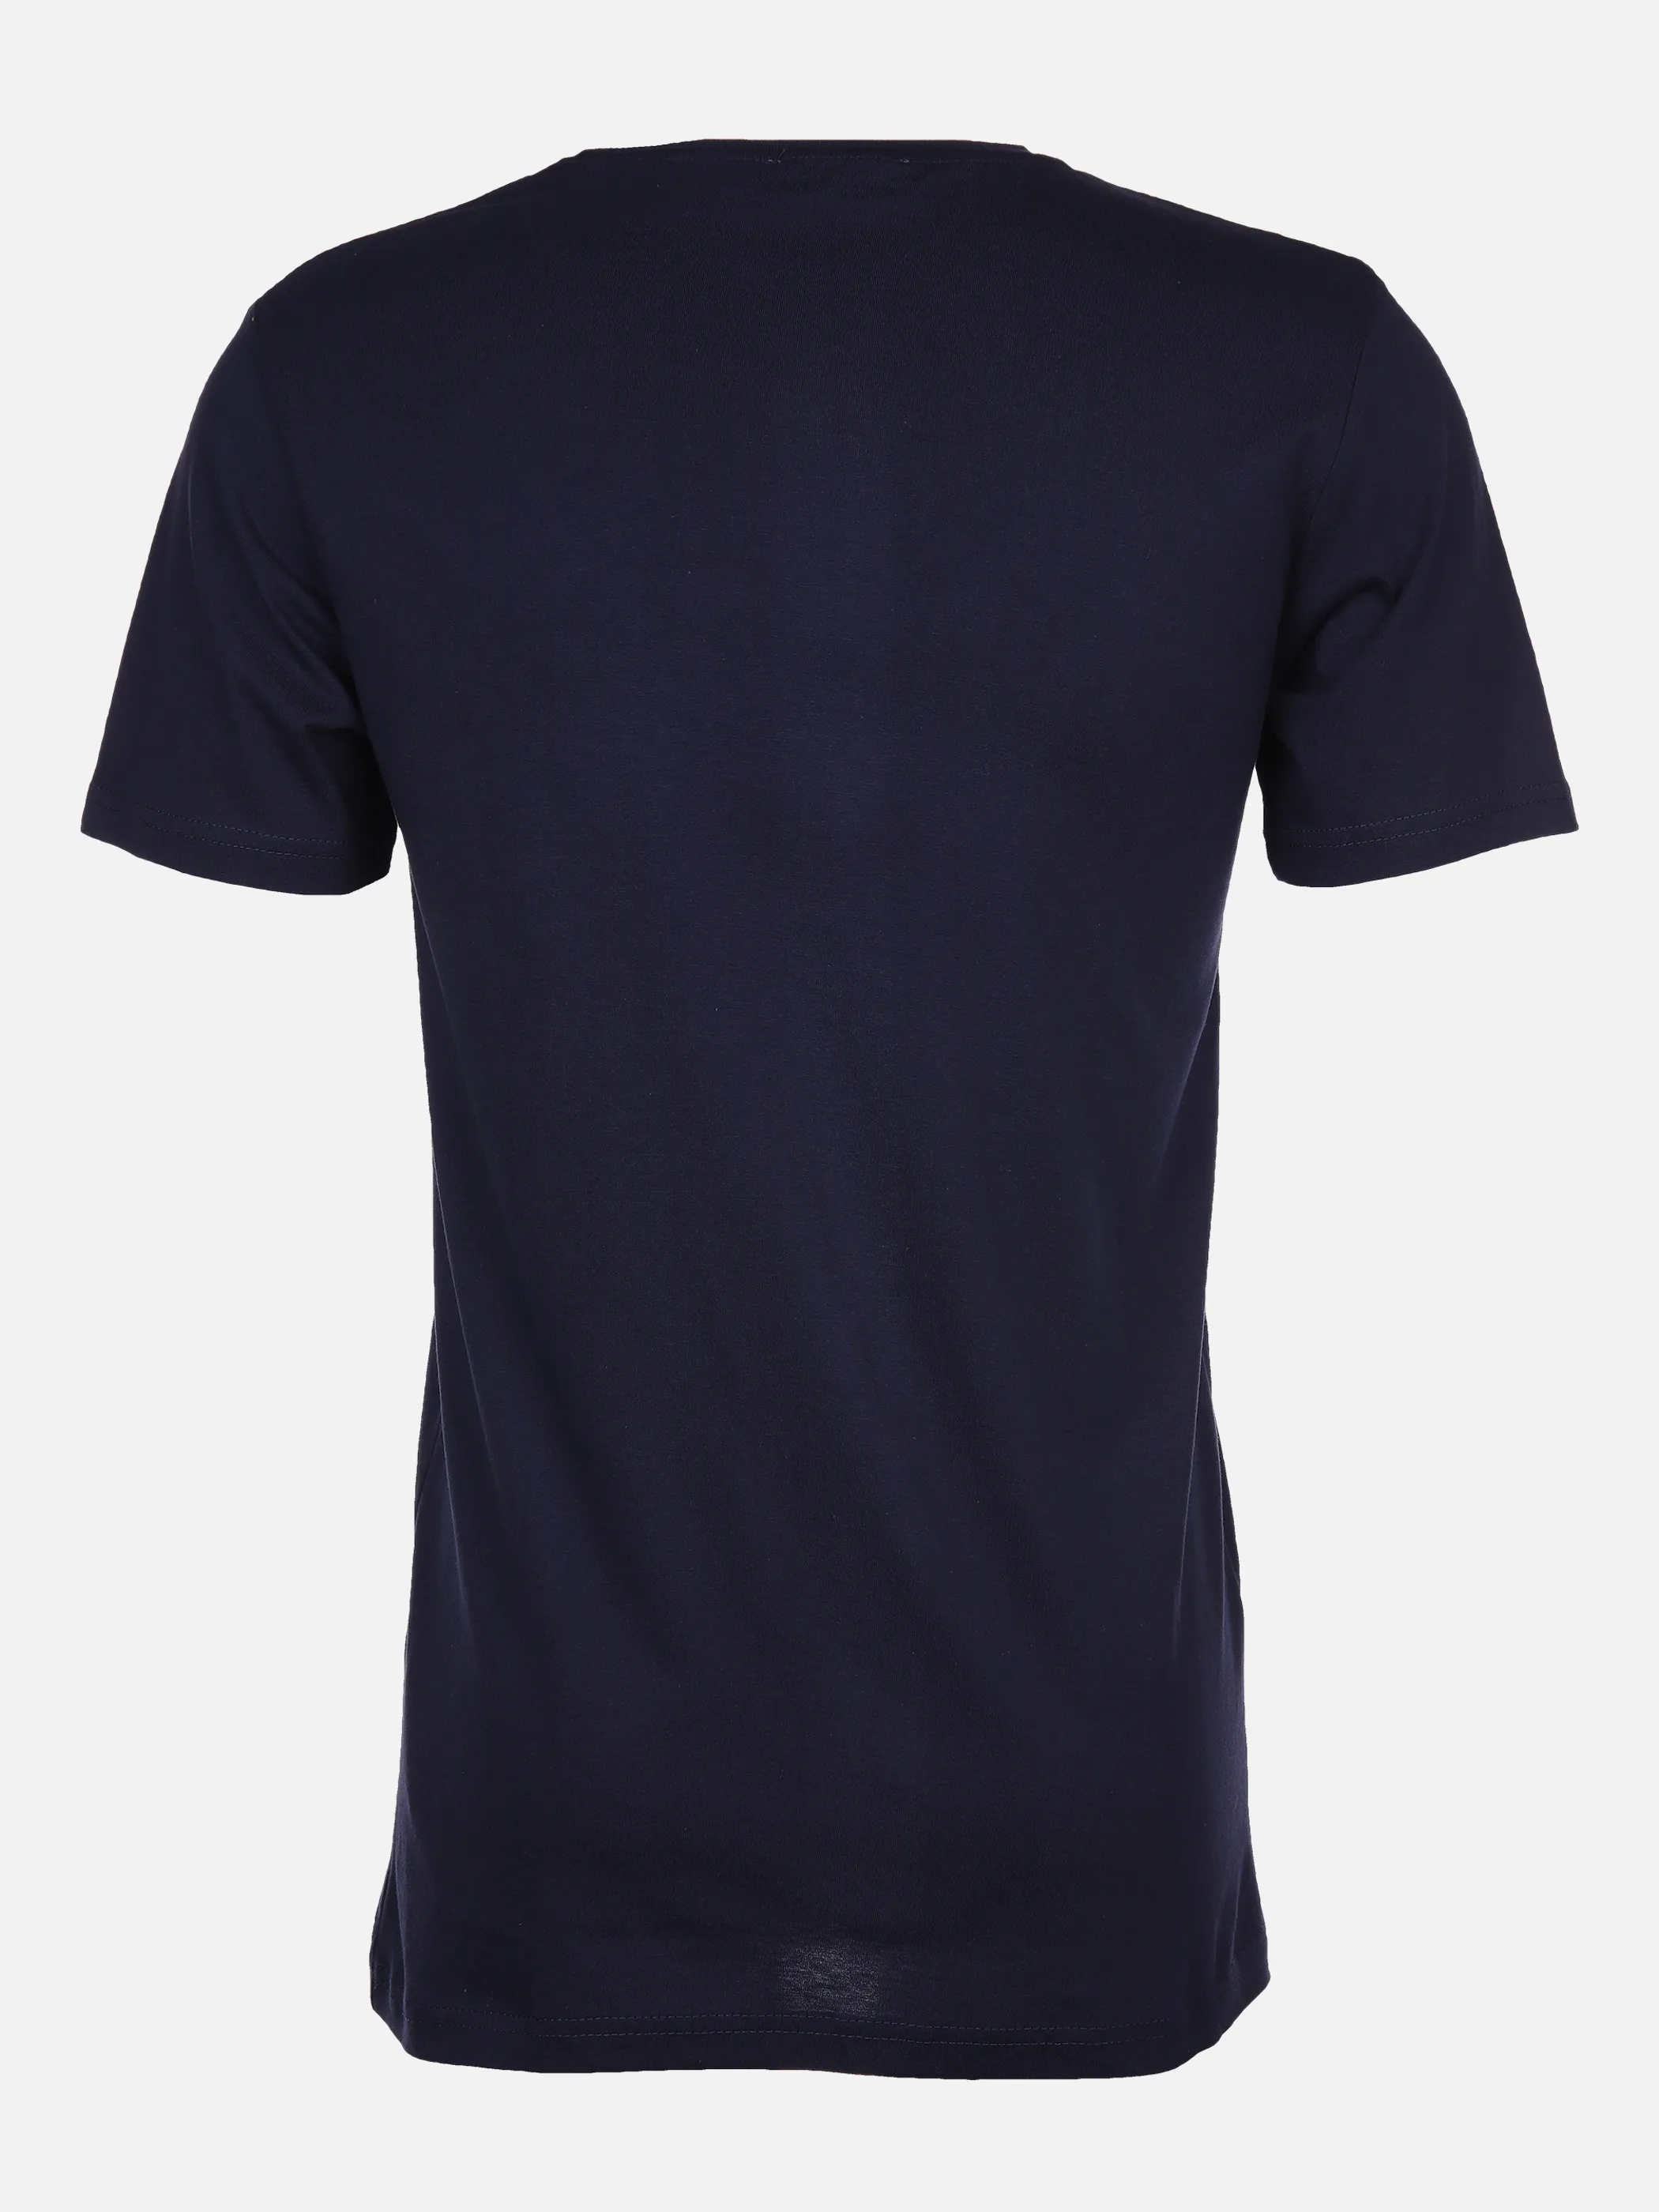 Harvey Miller He. T-Shirt 1/2 Arm Logo Blau 882848 NAVY 2